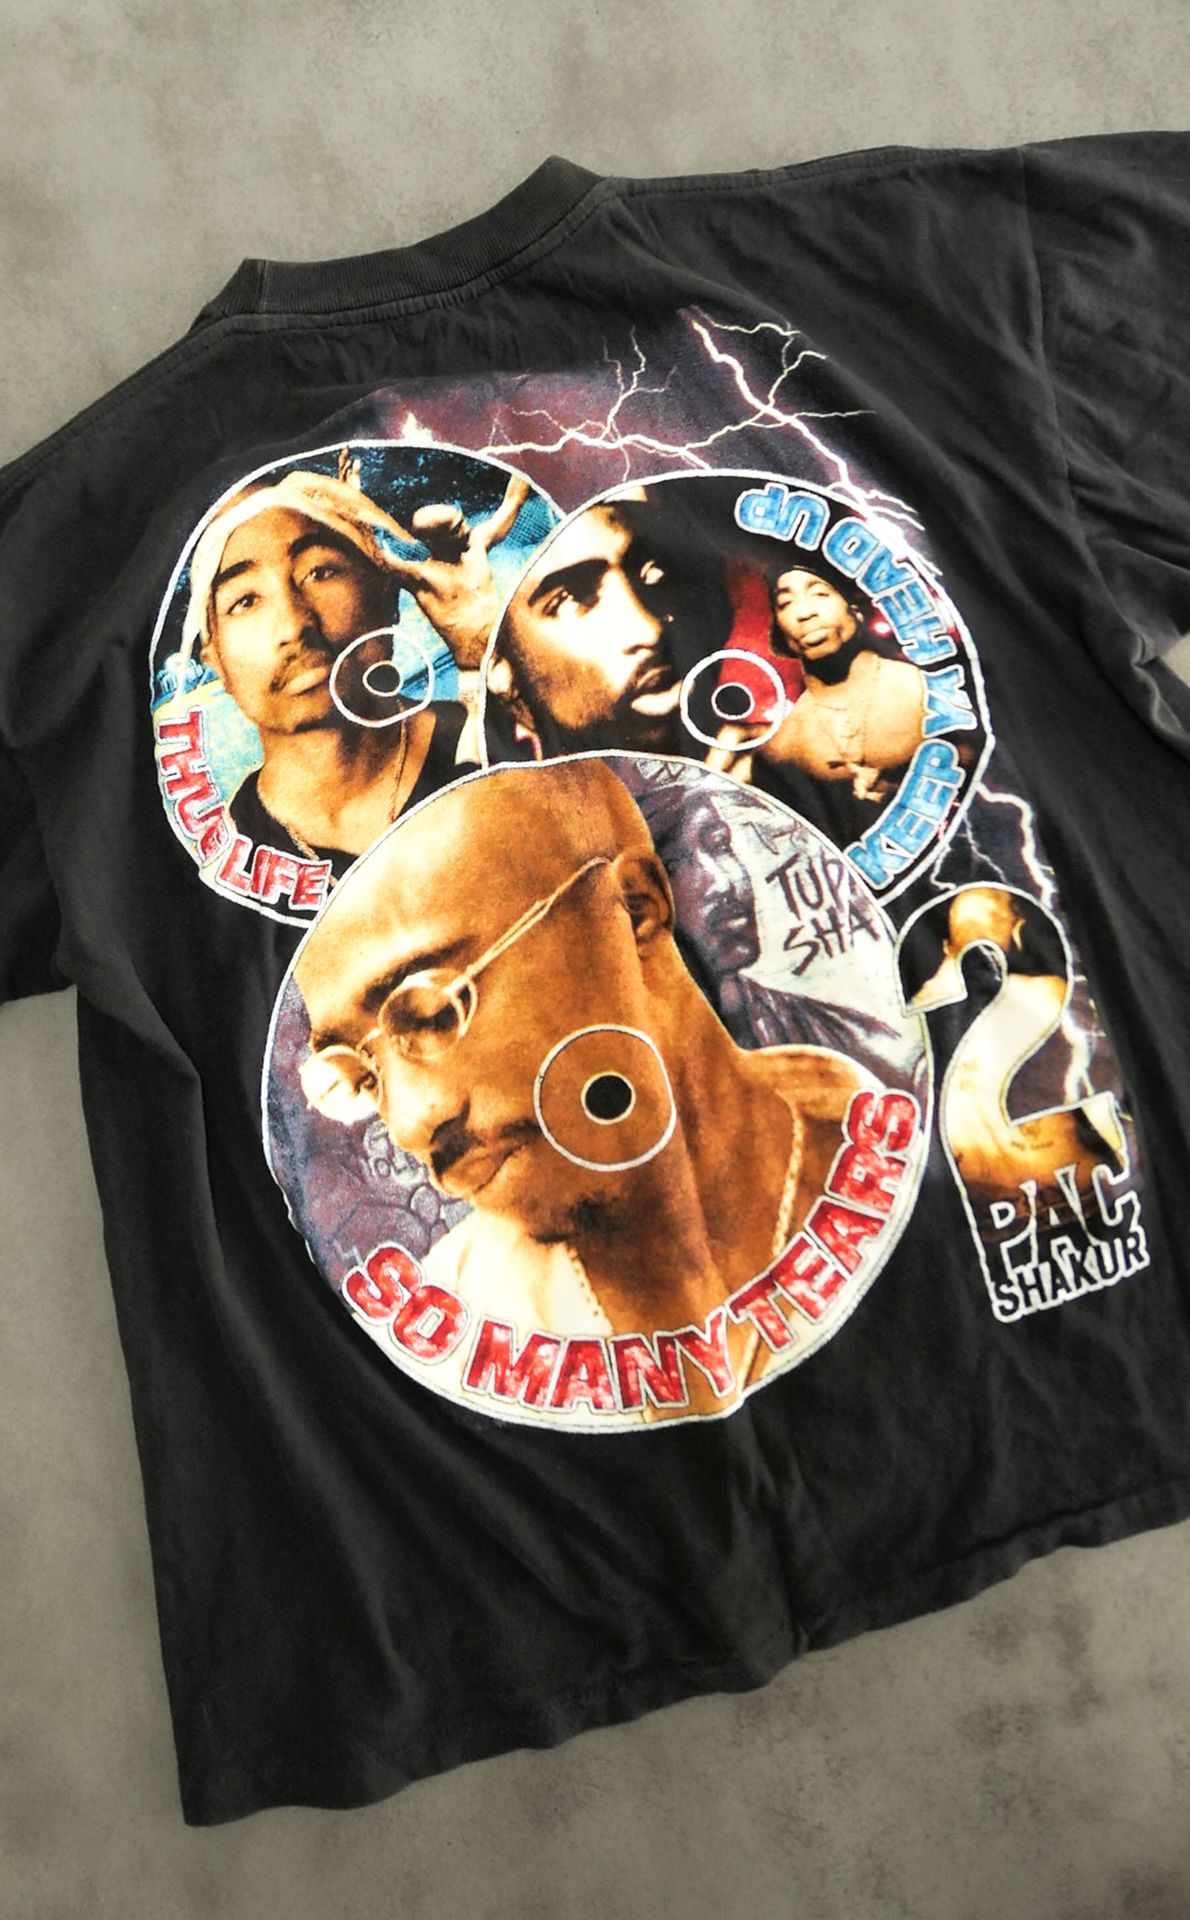 Vintage 90s 2PAC Rap Tee Shirt - TUPAC SHAKUR - Greatest Hits for 